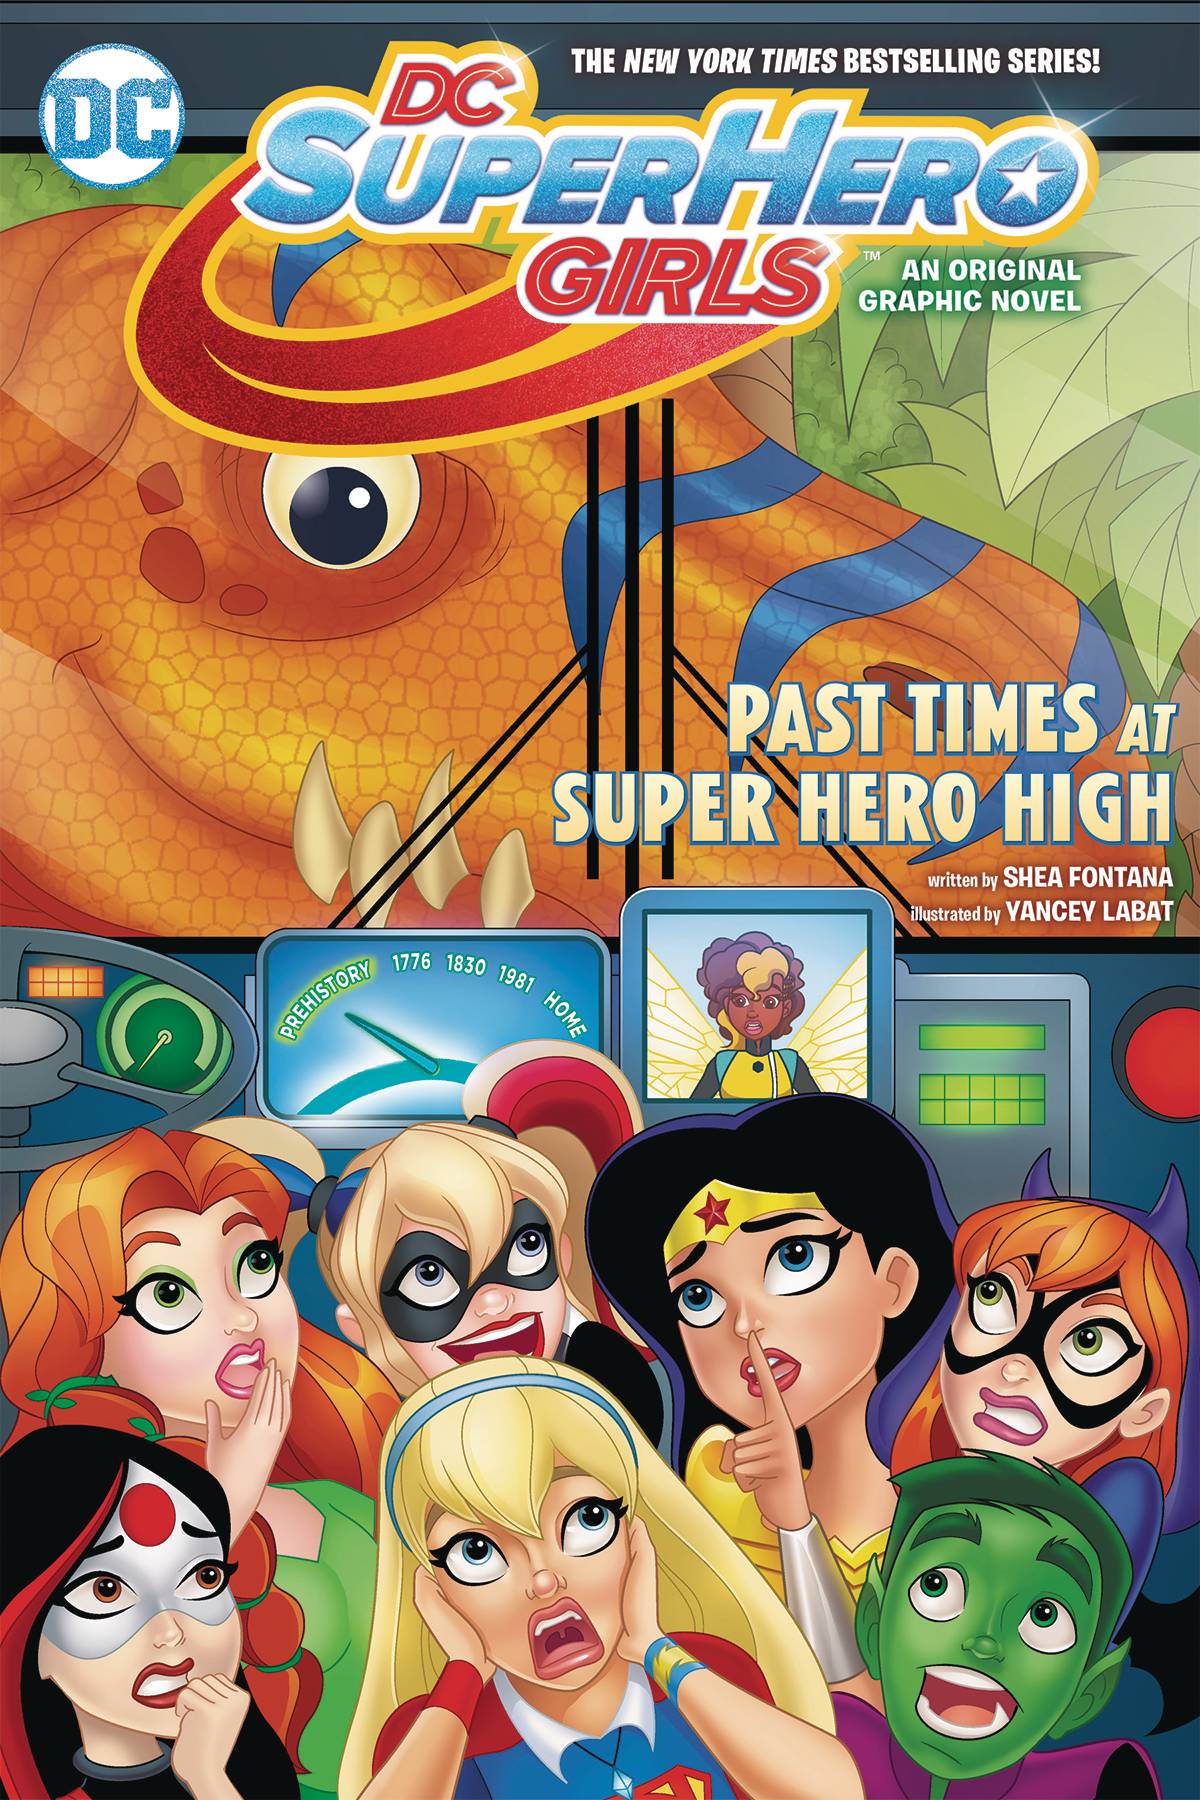 DC Super Hero Girls vol 4: Past Times At Super Hero High s/c